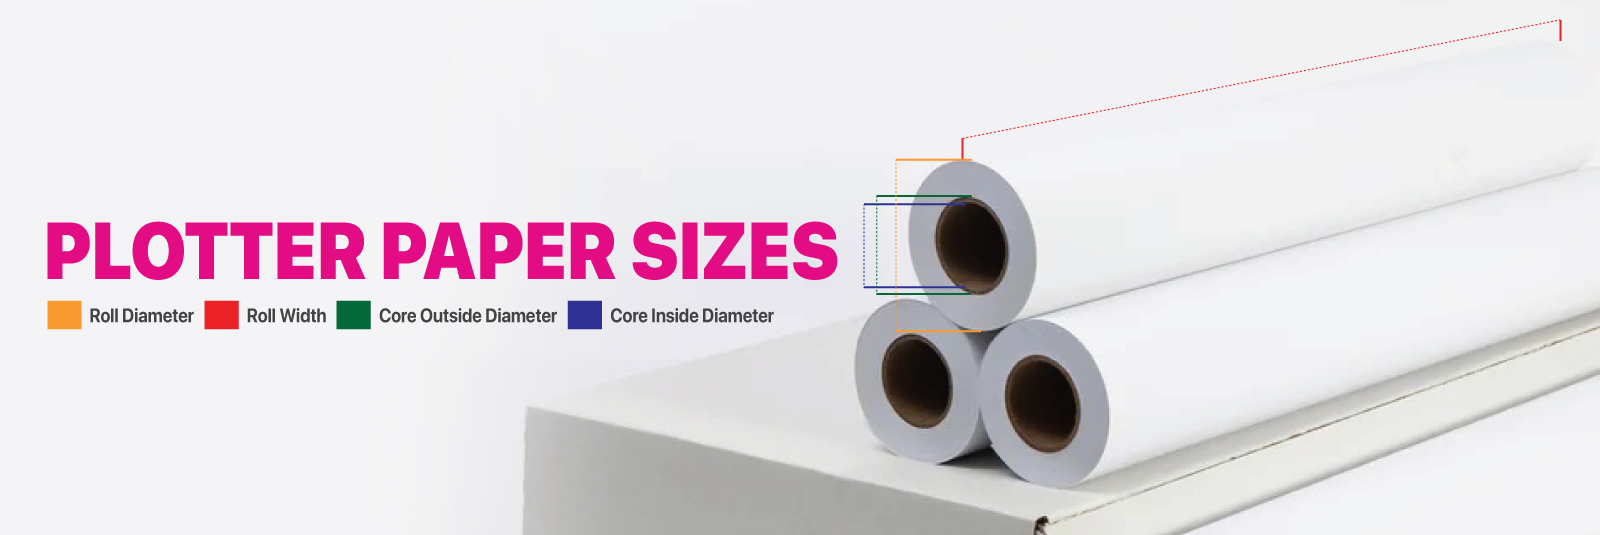 Plotter Paper Sizes - Roll Diameter, Roll Width, Core Outside Diameter, Core Inside Diameter